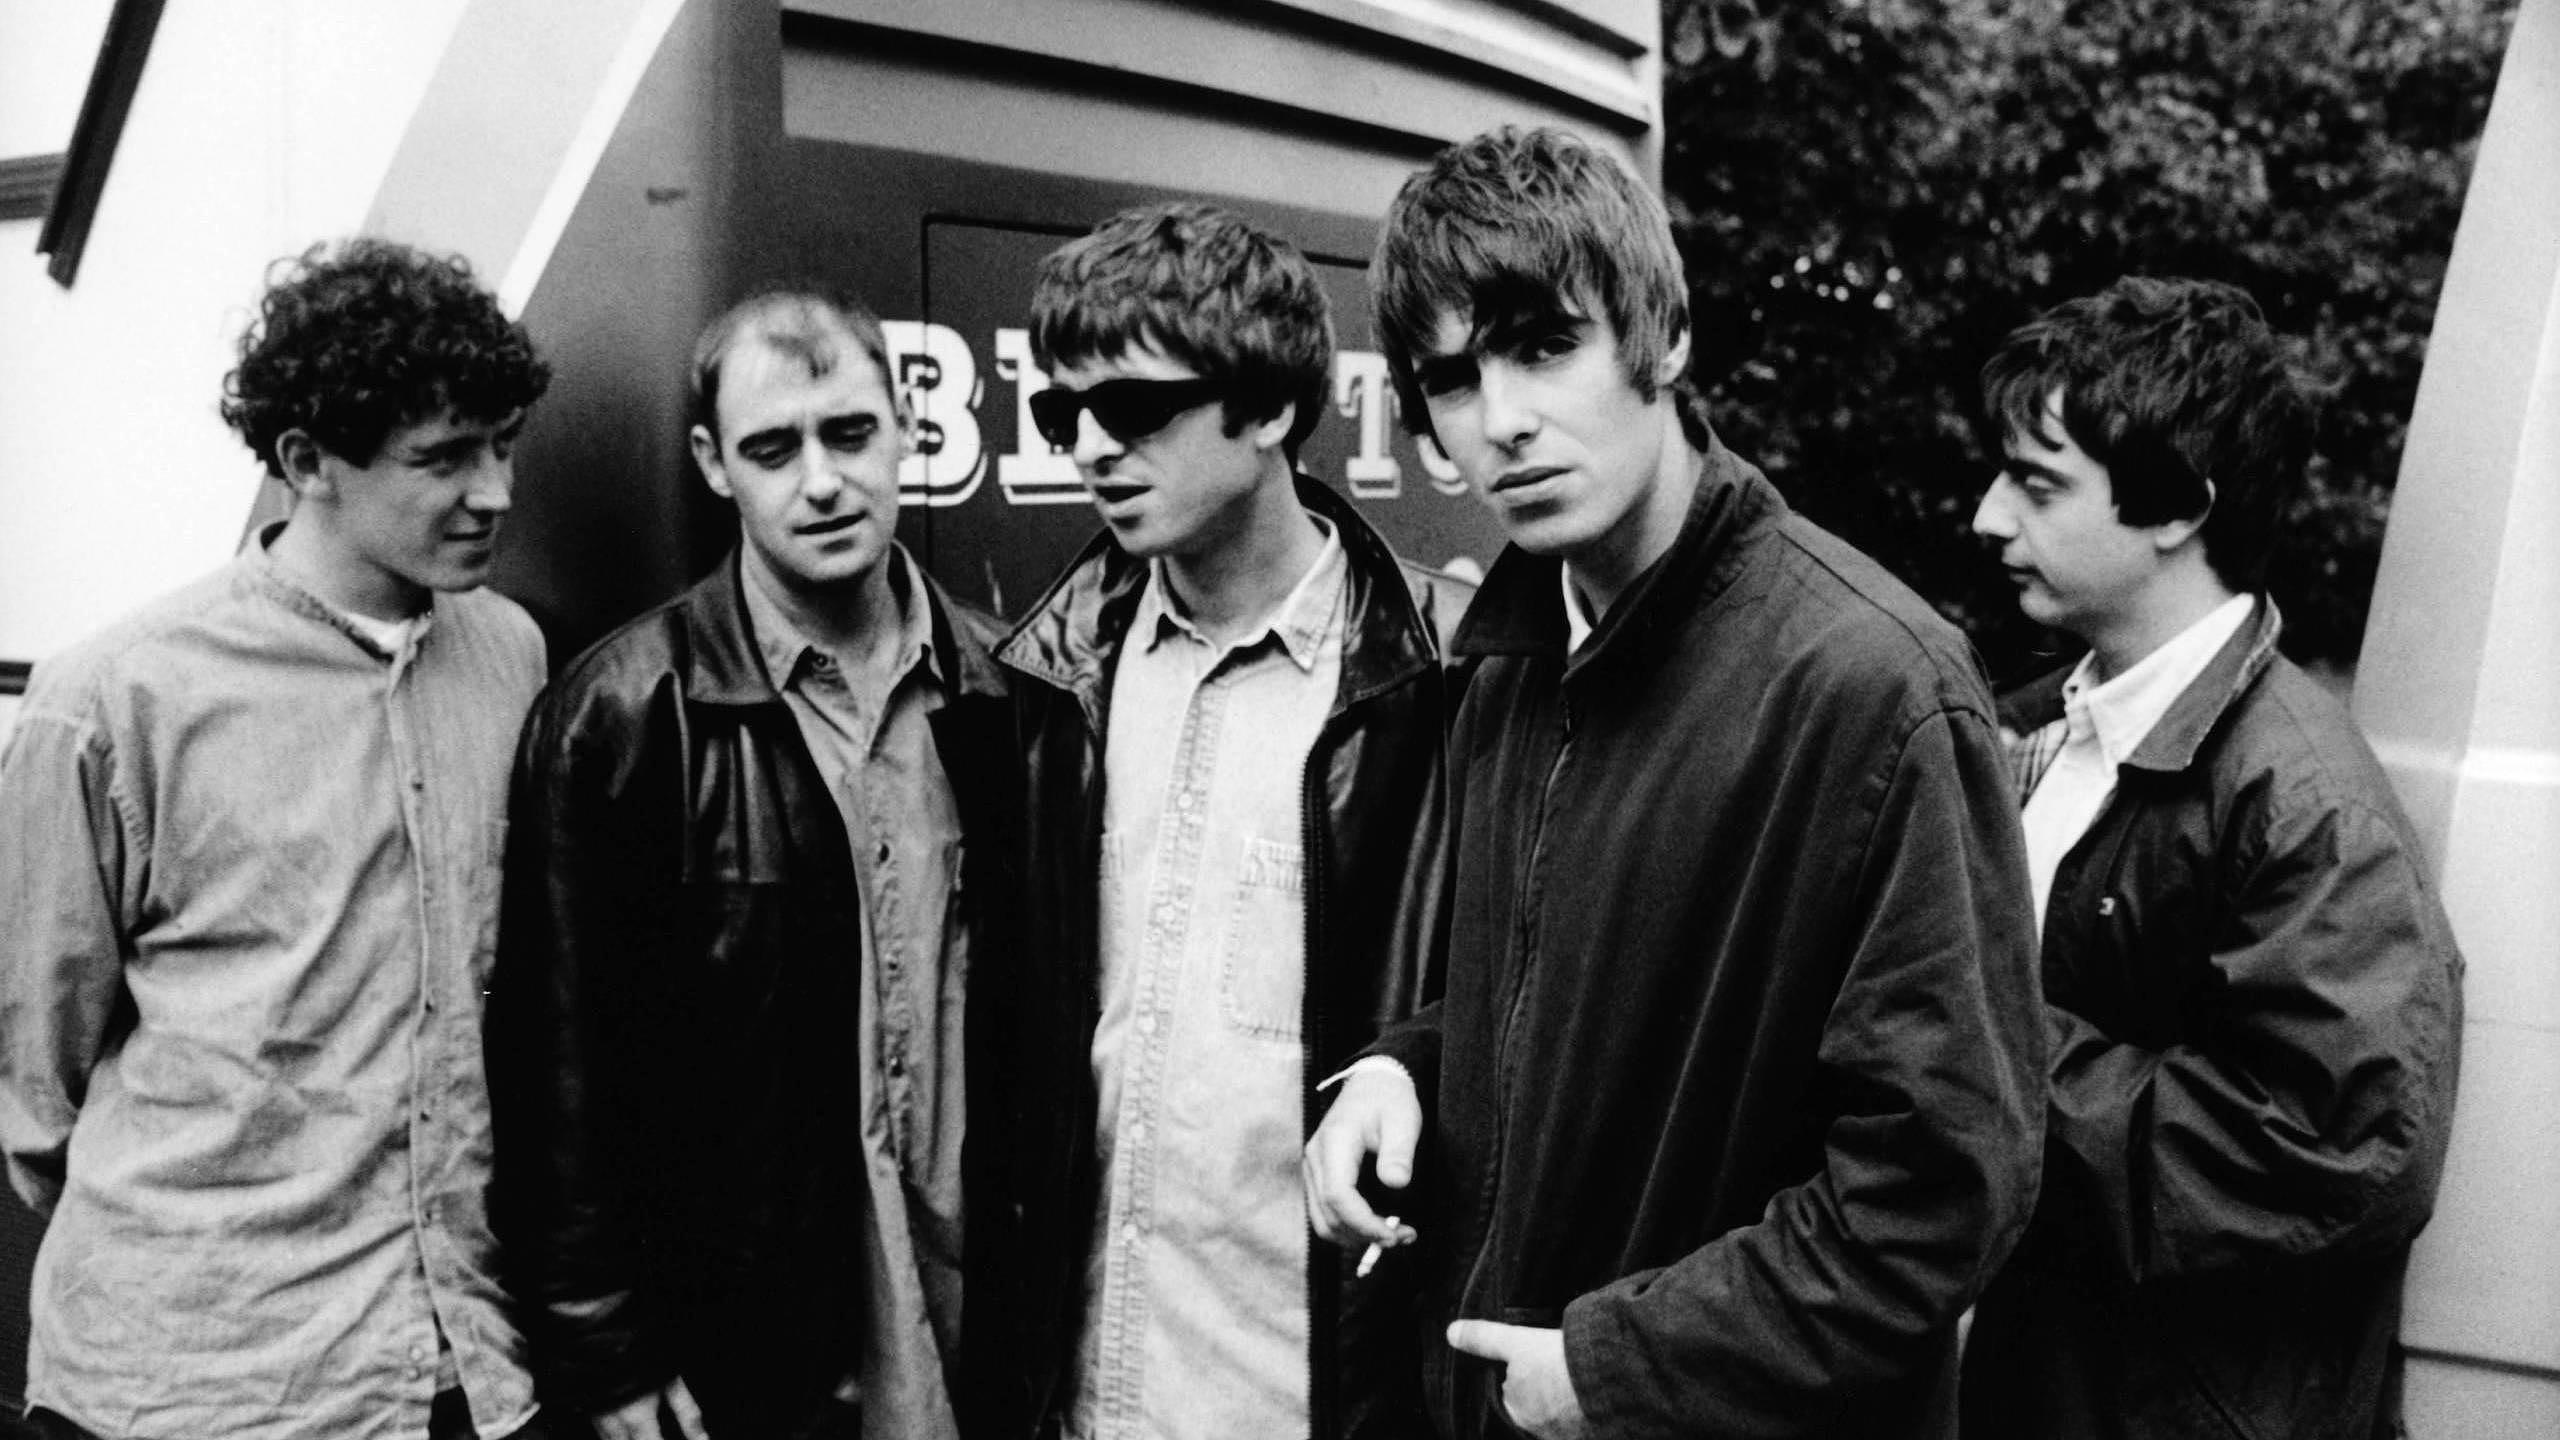 Oasis 1994: Tony McCarroll, Paul 'Bonehead' Arthurs, Noel Gallagher, Liam Gallagher, Paul 'Guigsy' McGuigan